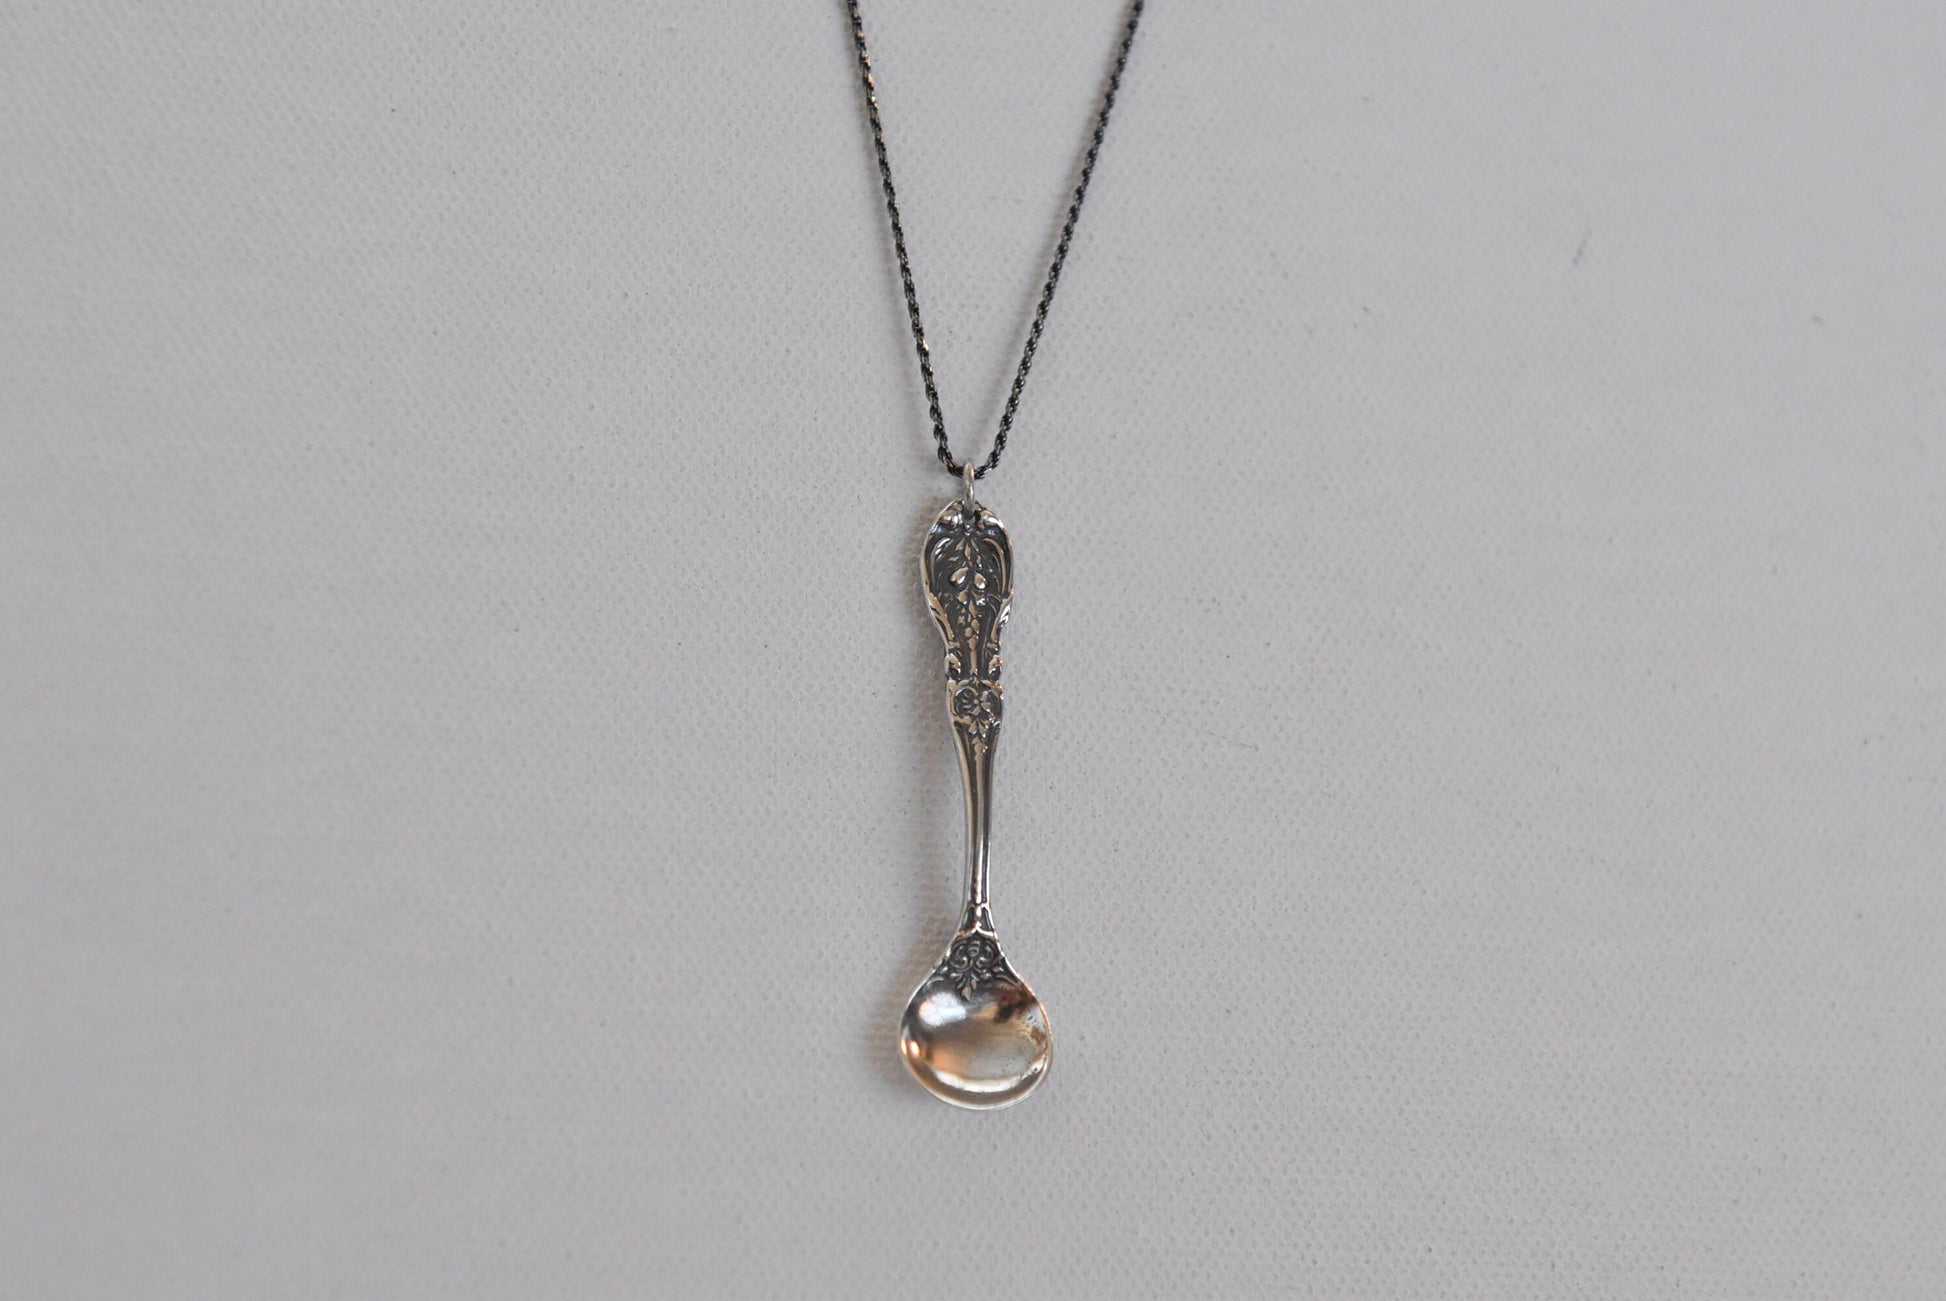 Mini Little Salt Sugar Charm Spoon Necklace Pendant Silver Gold Rose Gold  Black | eBay